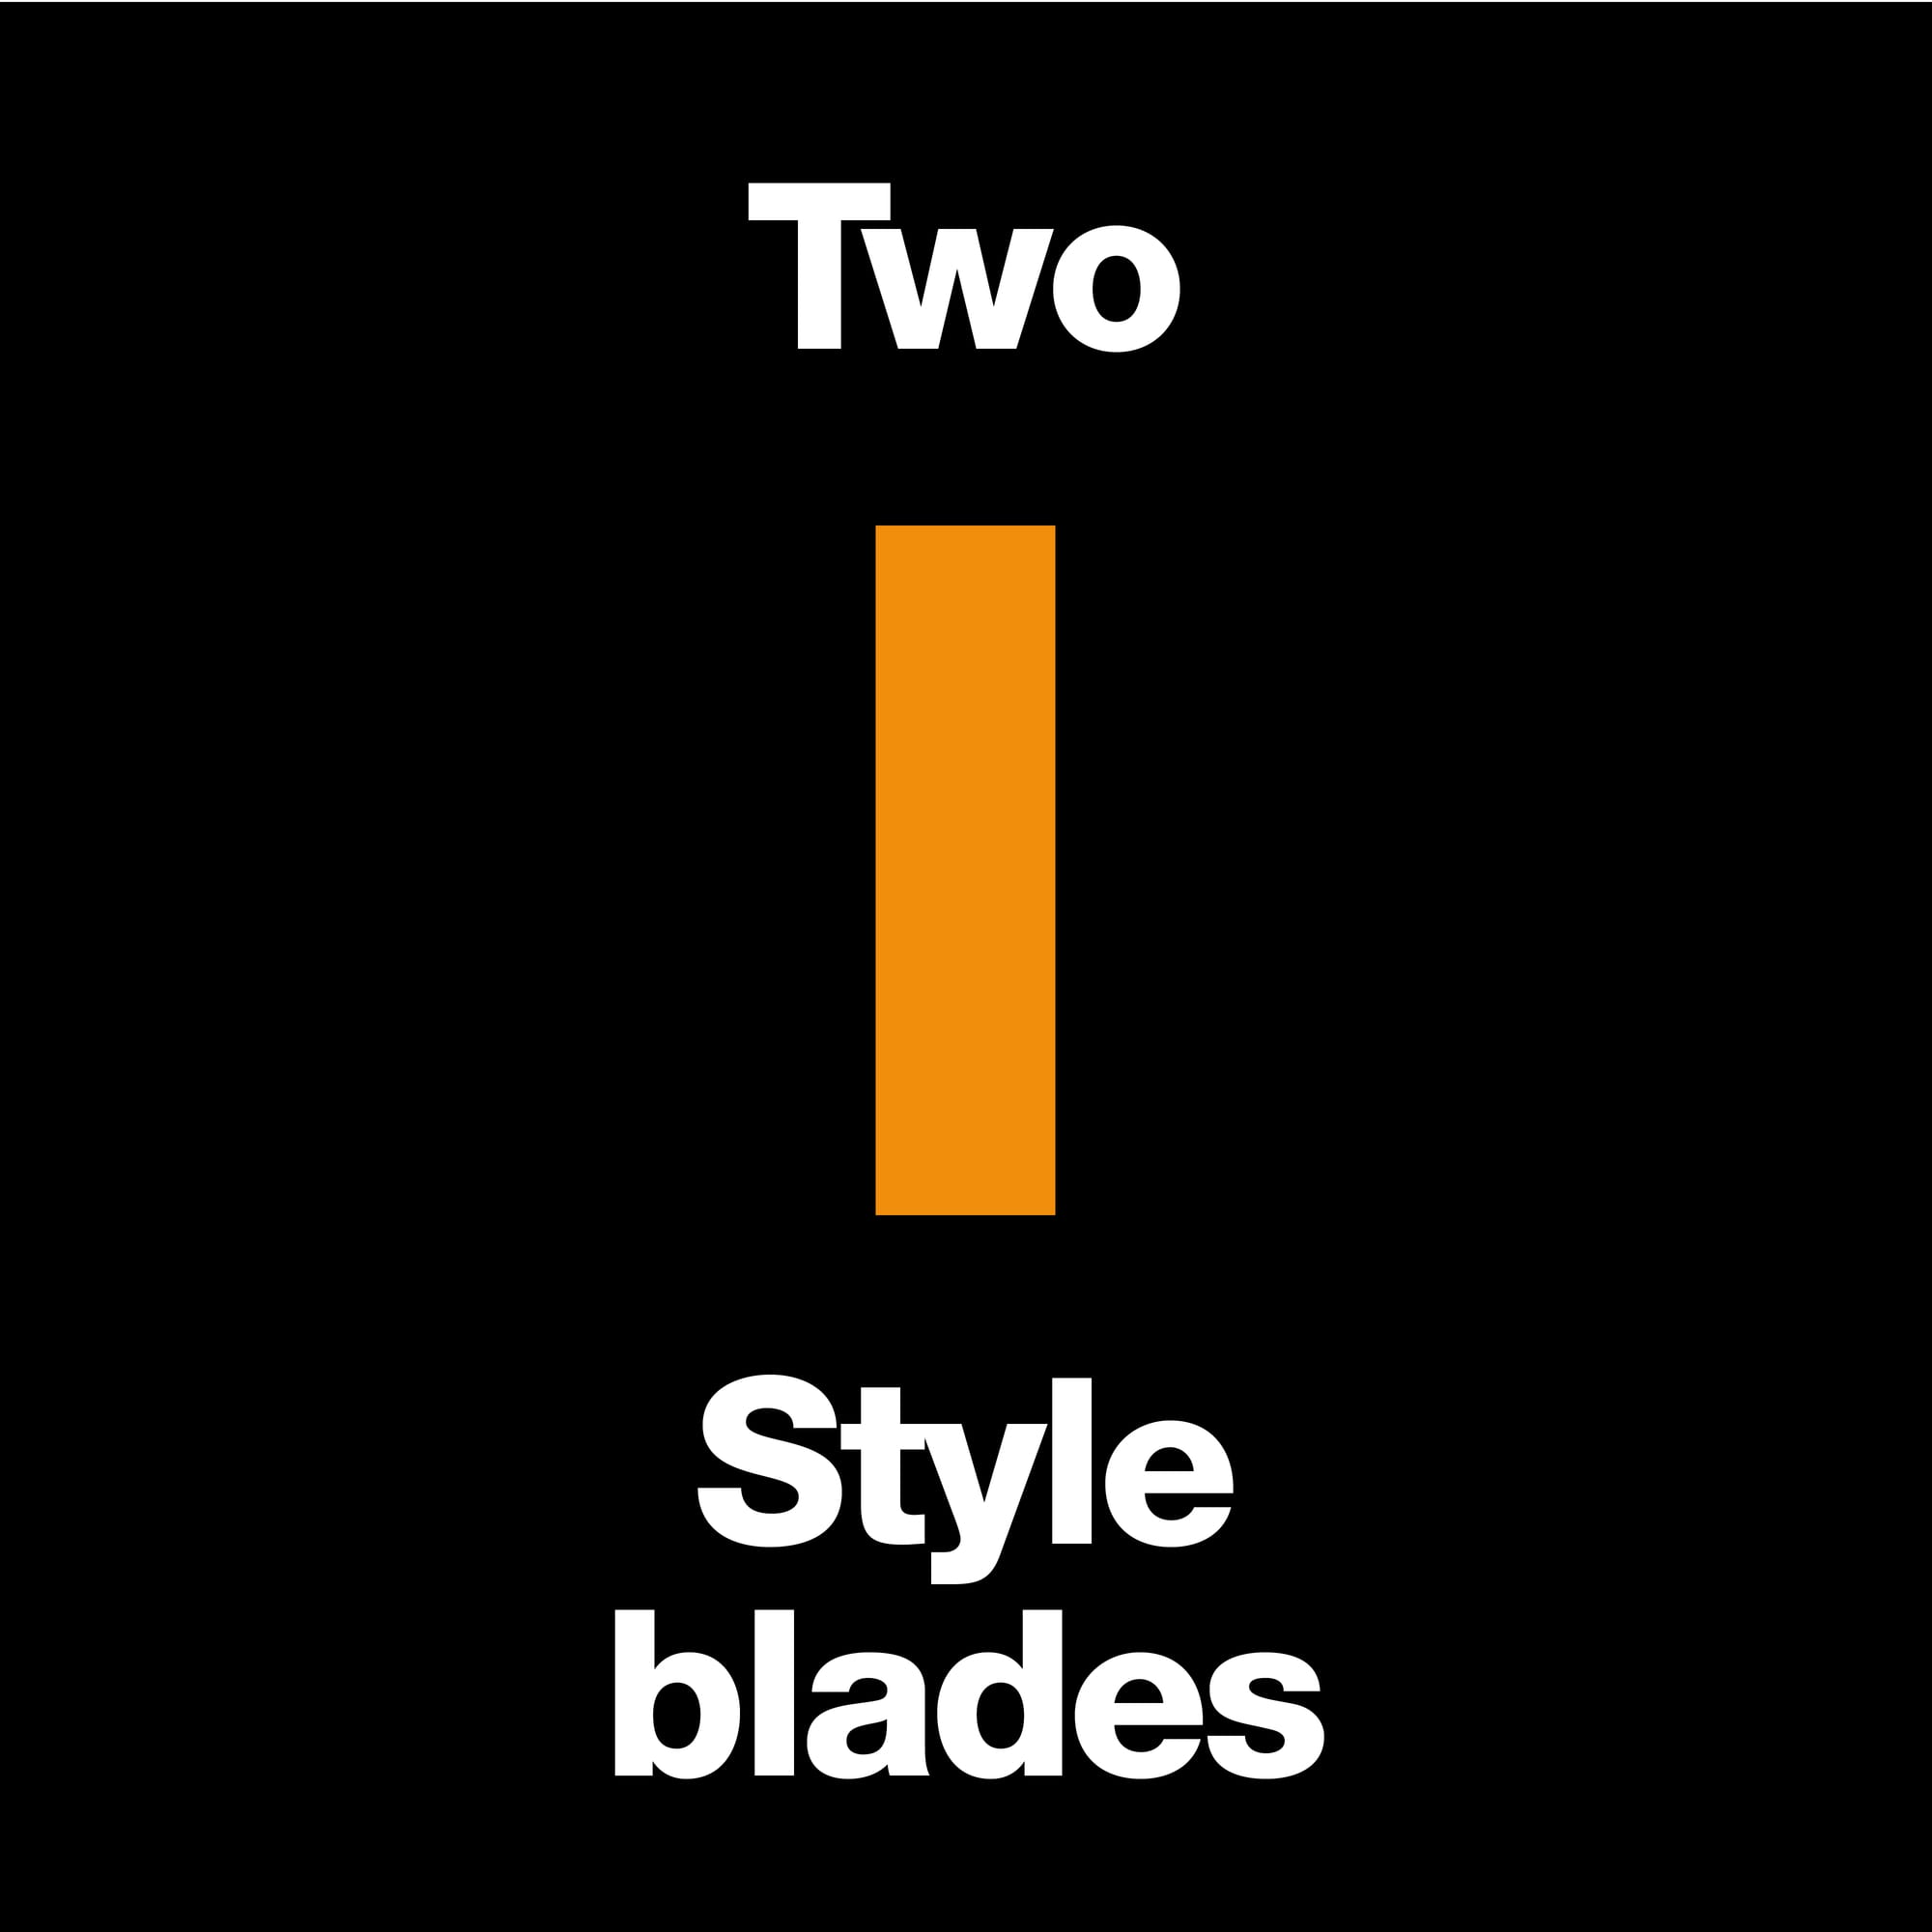 Fiskars&#xAE; High Profile TripleTrack&#x2122; Cutting Blades